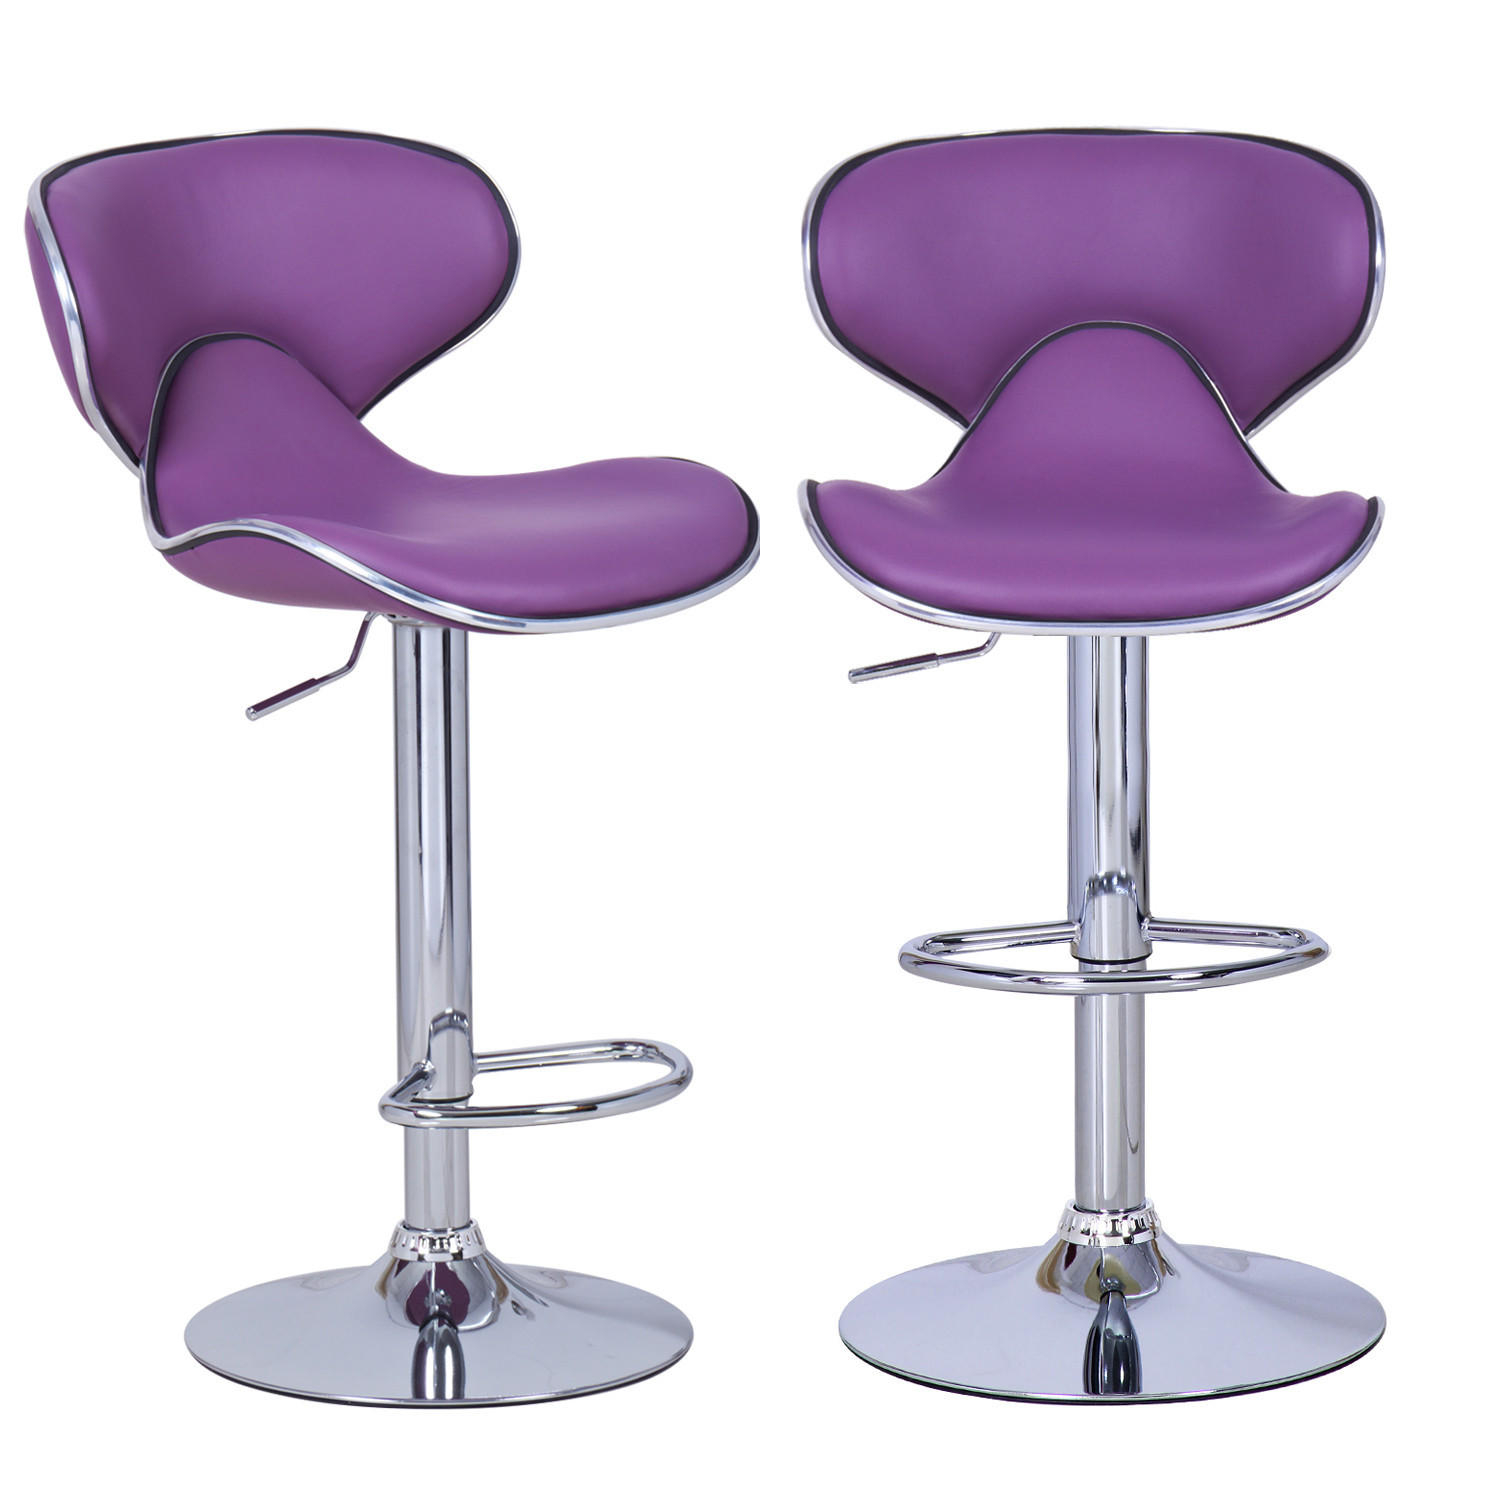 Adeco curved purple adjustable bar stool chairs set of 2